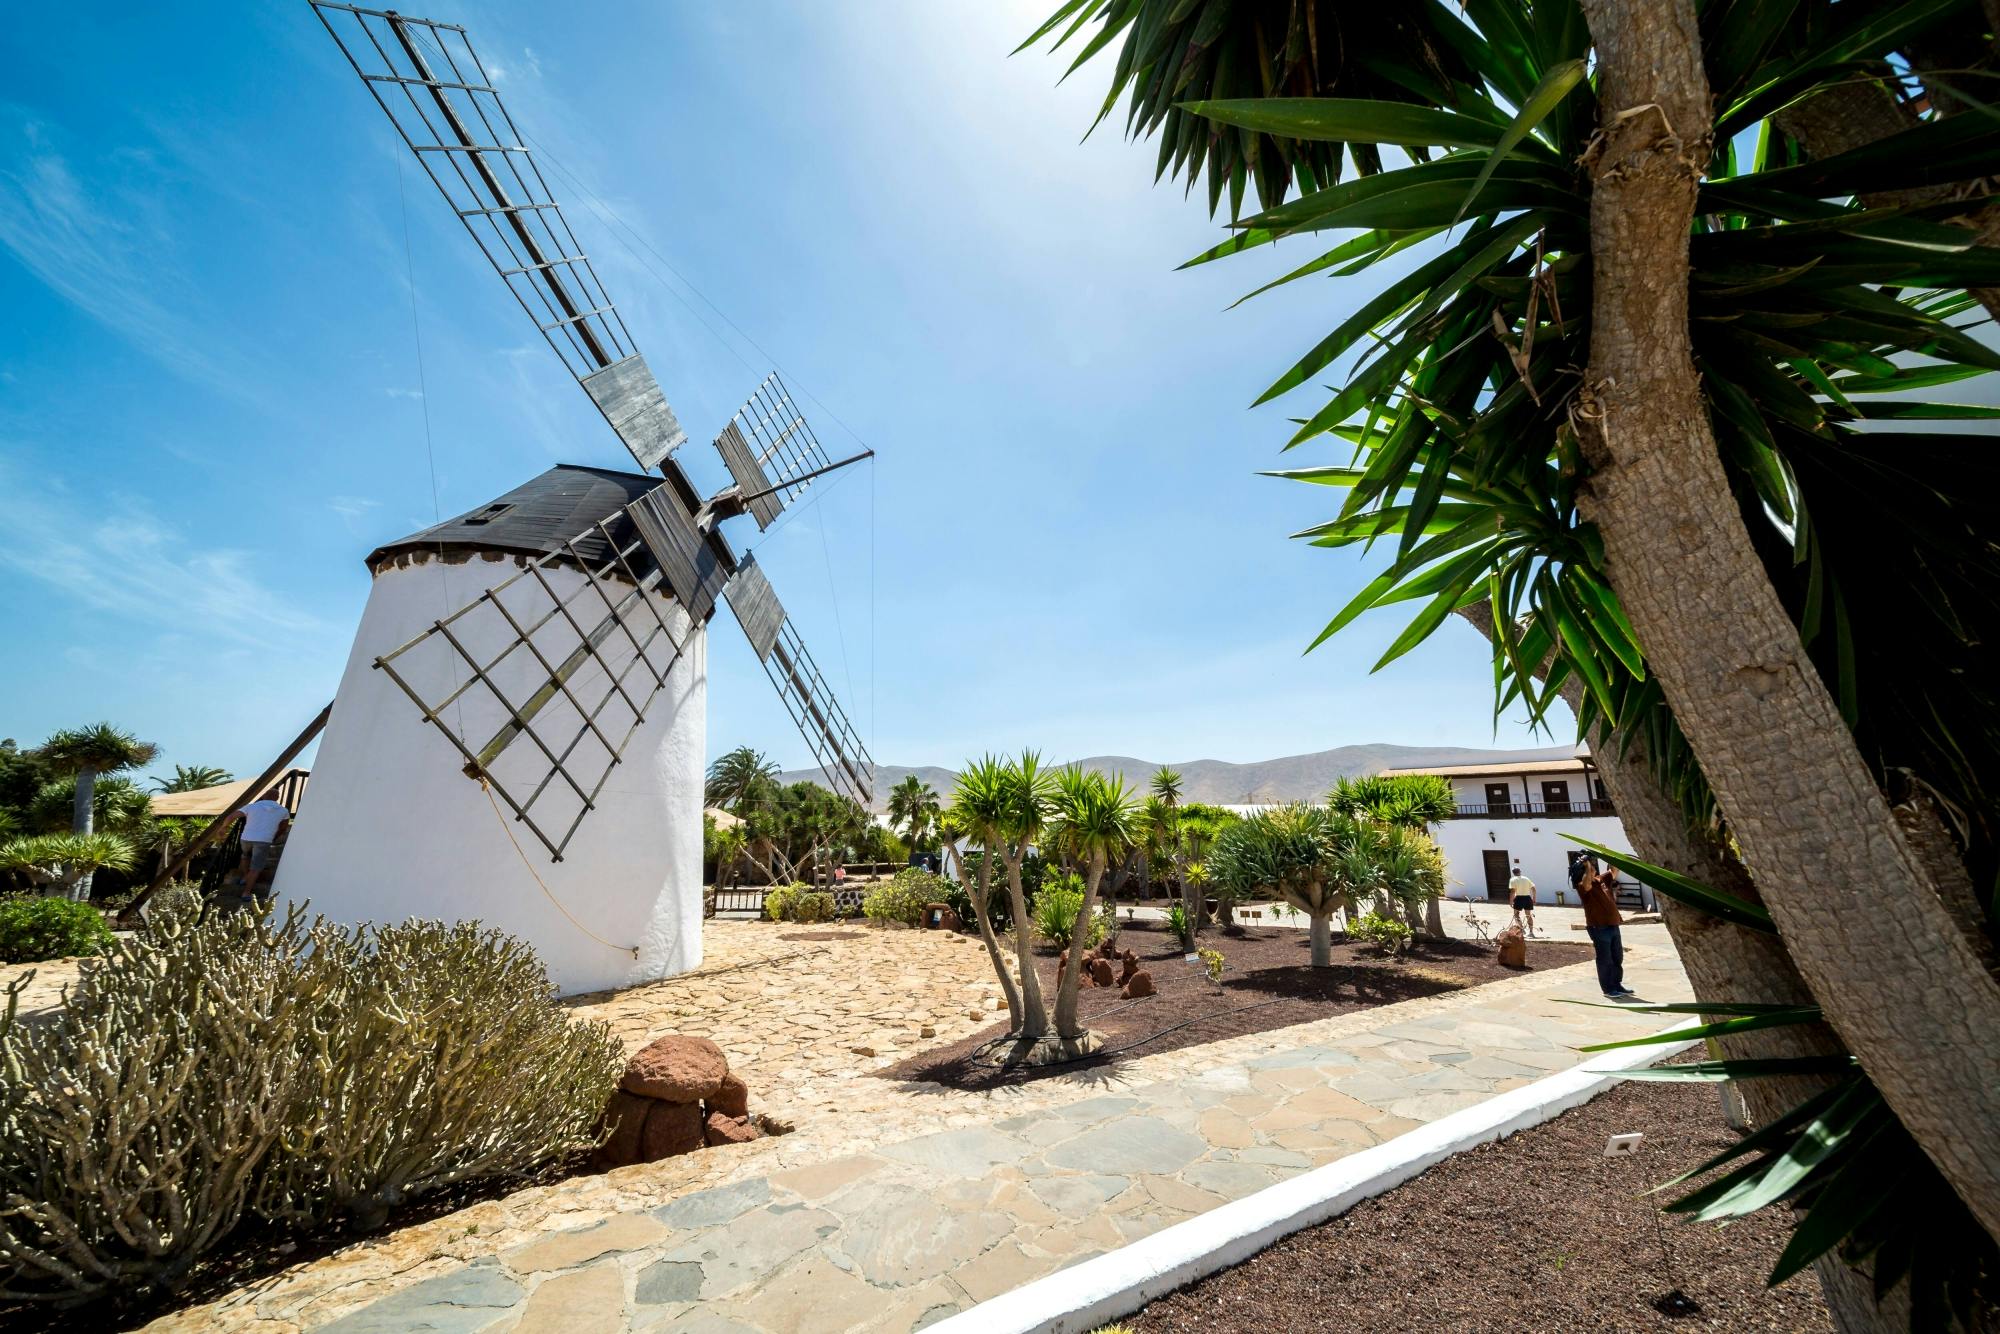 Fuerteventura Villages and Food Tour